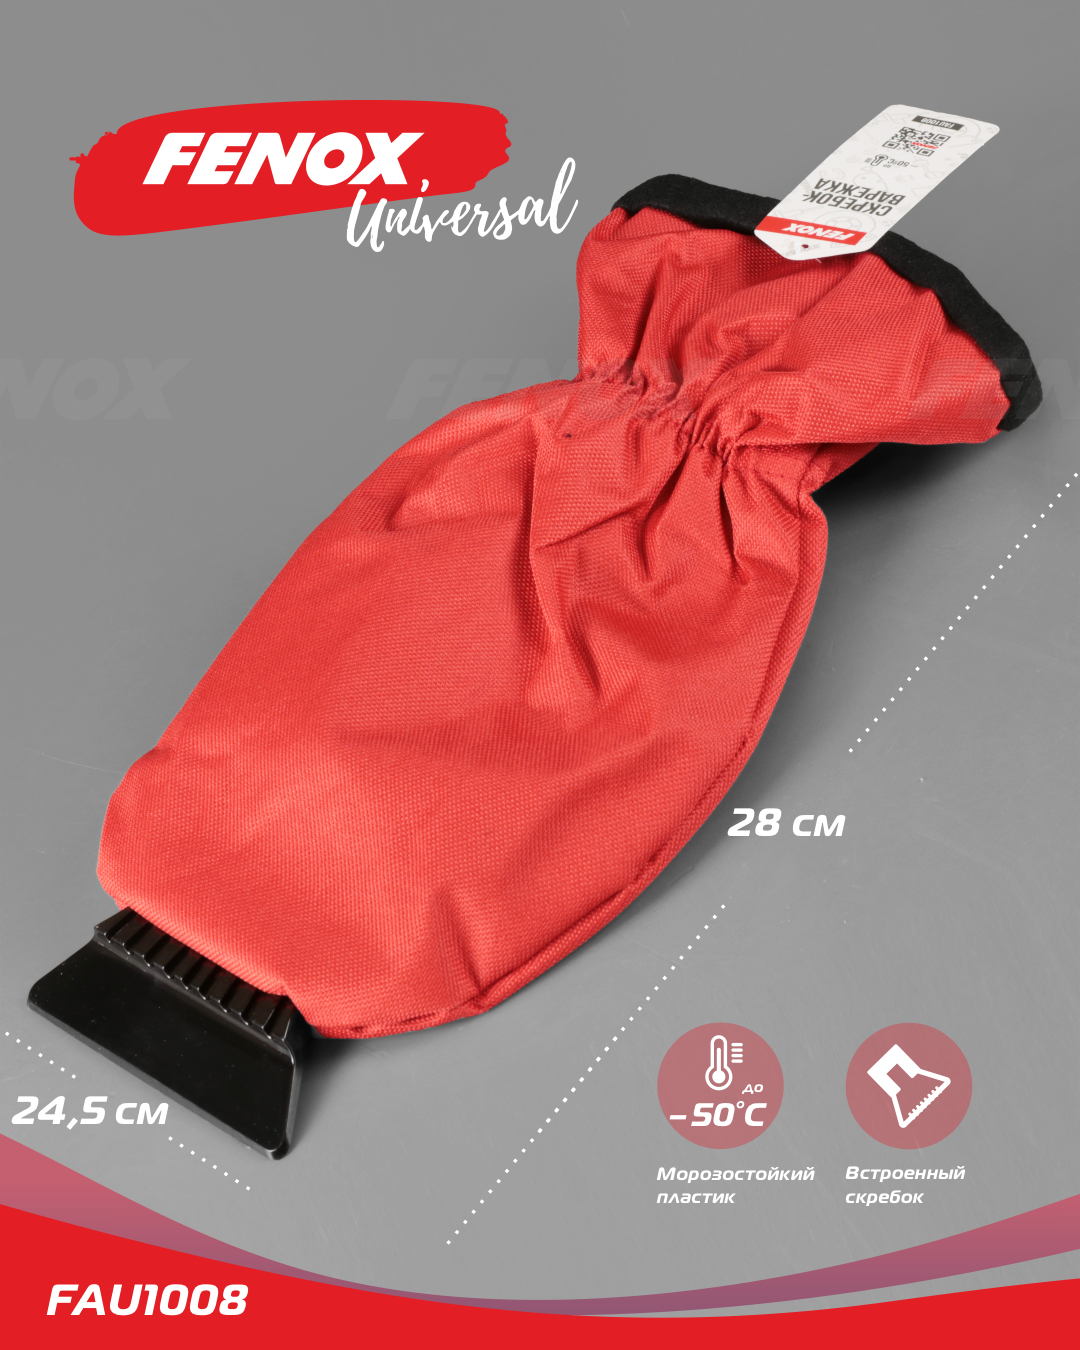 Скребок-варежка - Fenox FAU1008